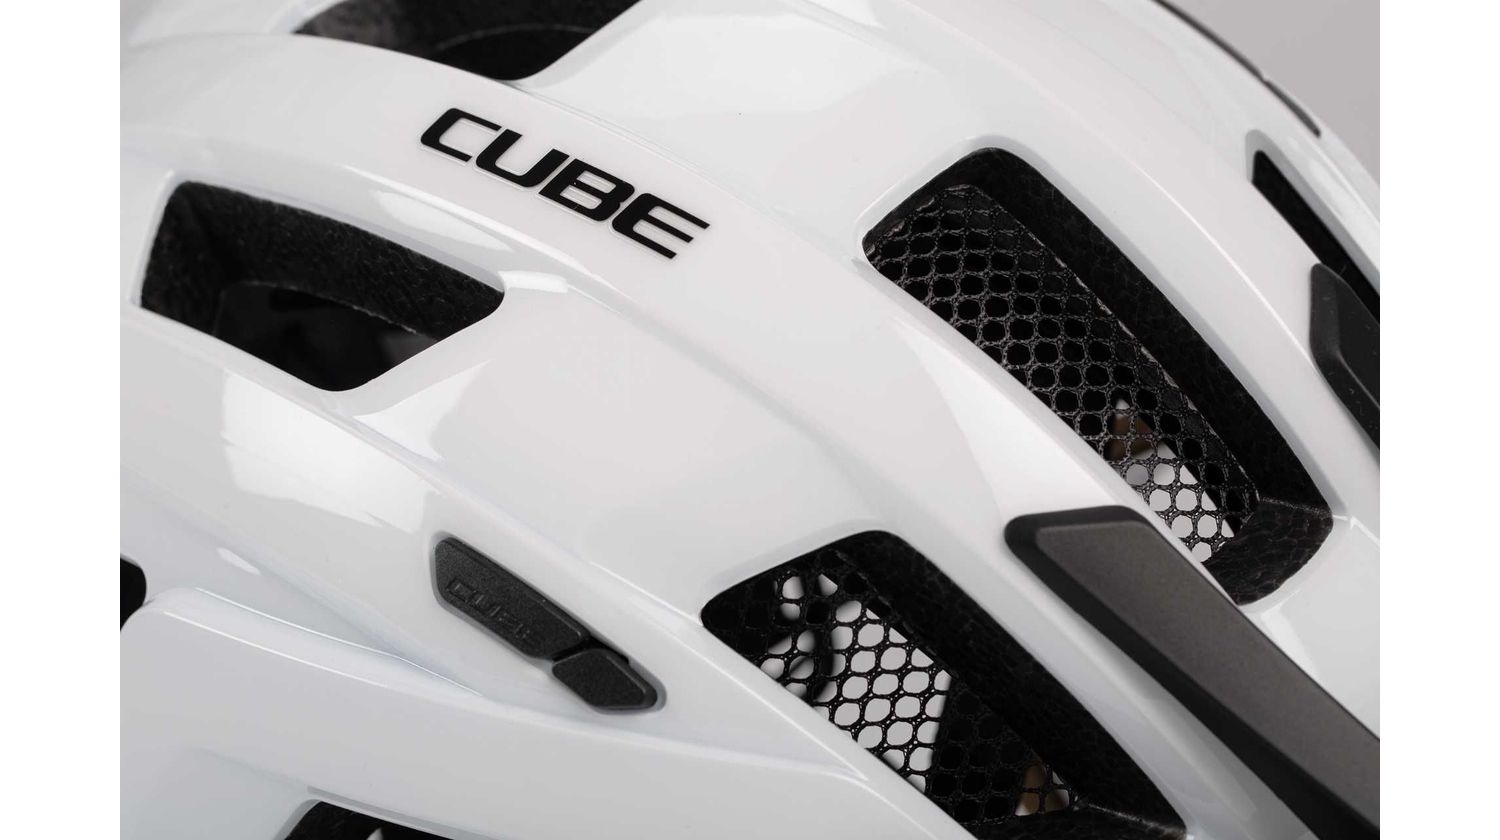 Cube Helm STEEP glossy white L/57-62 cm